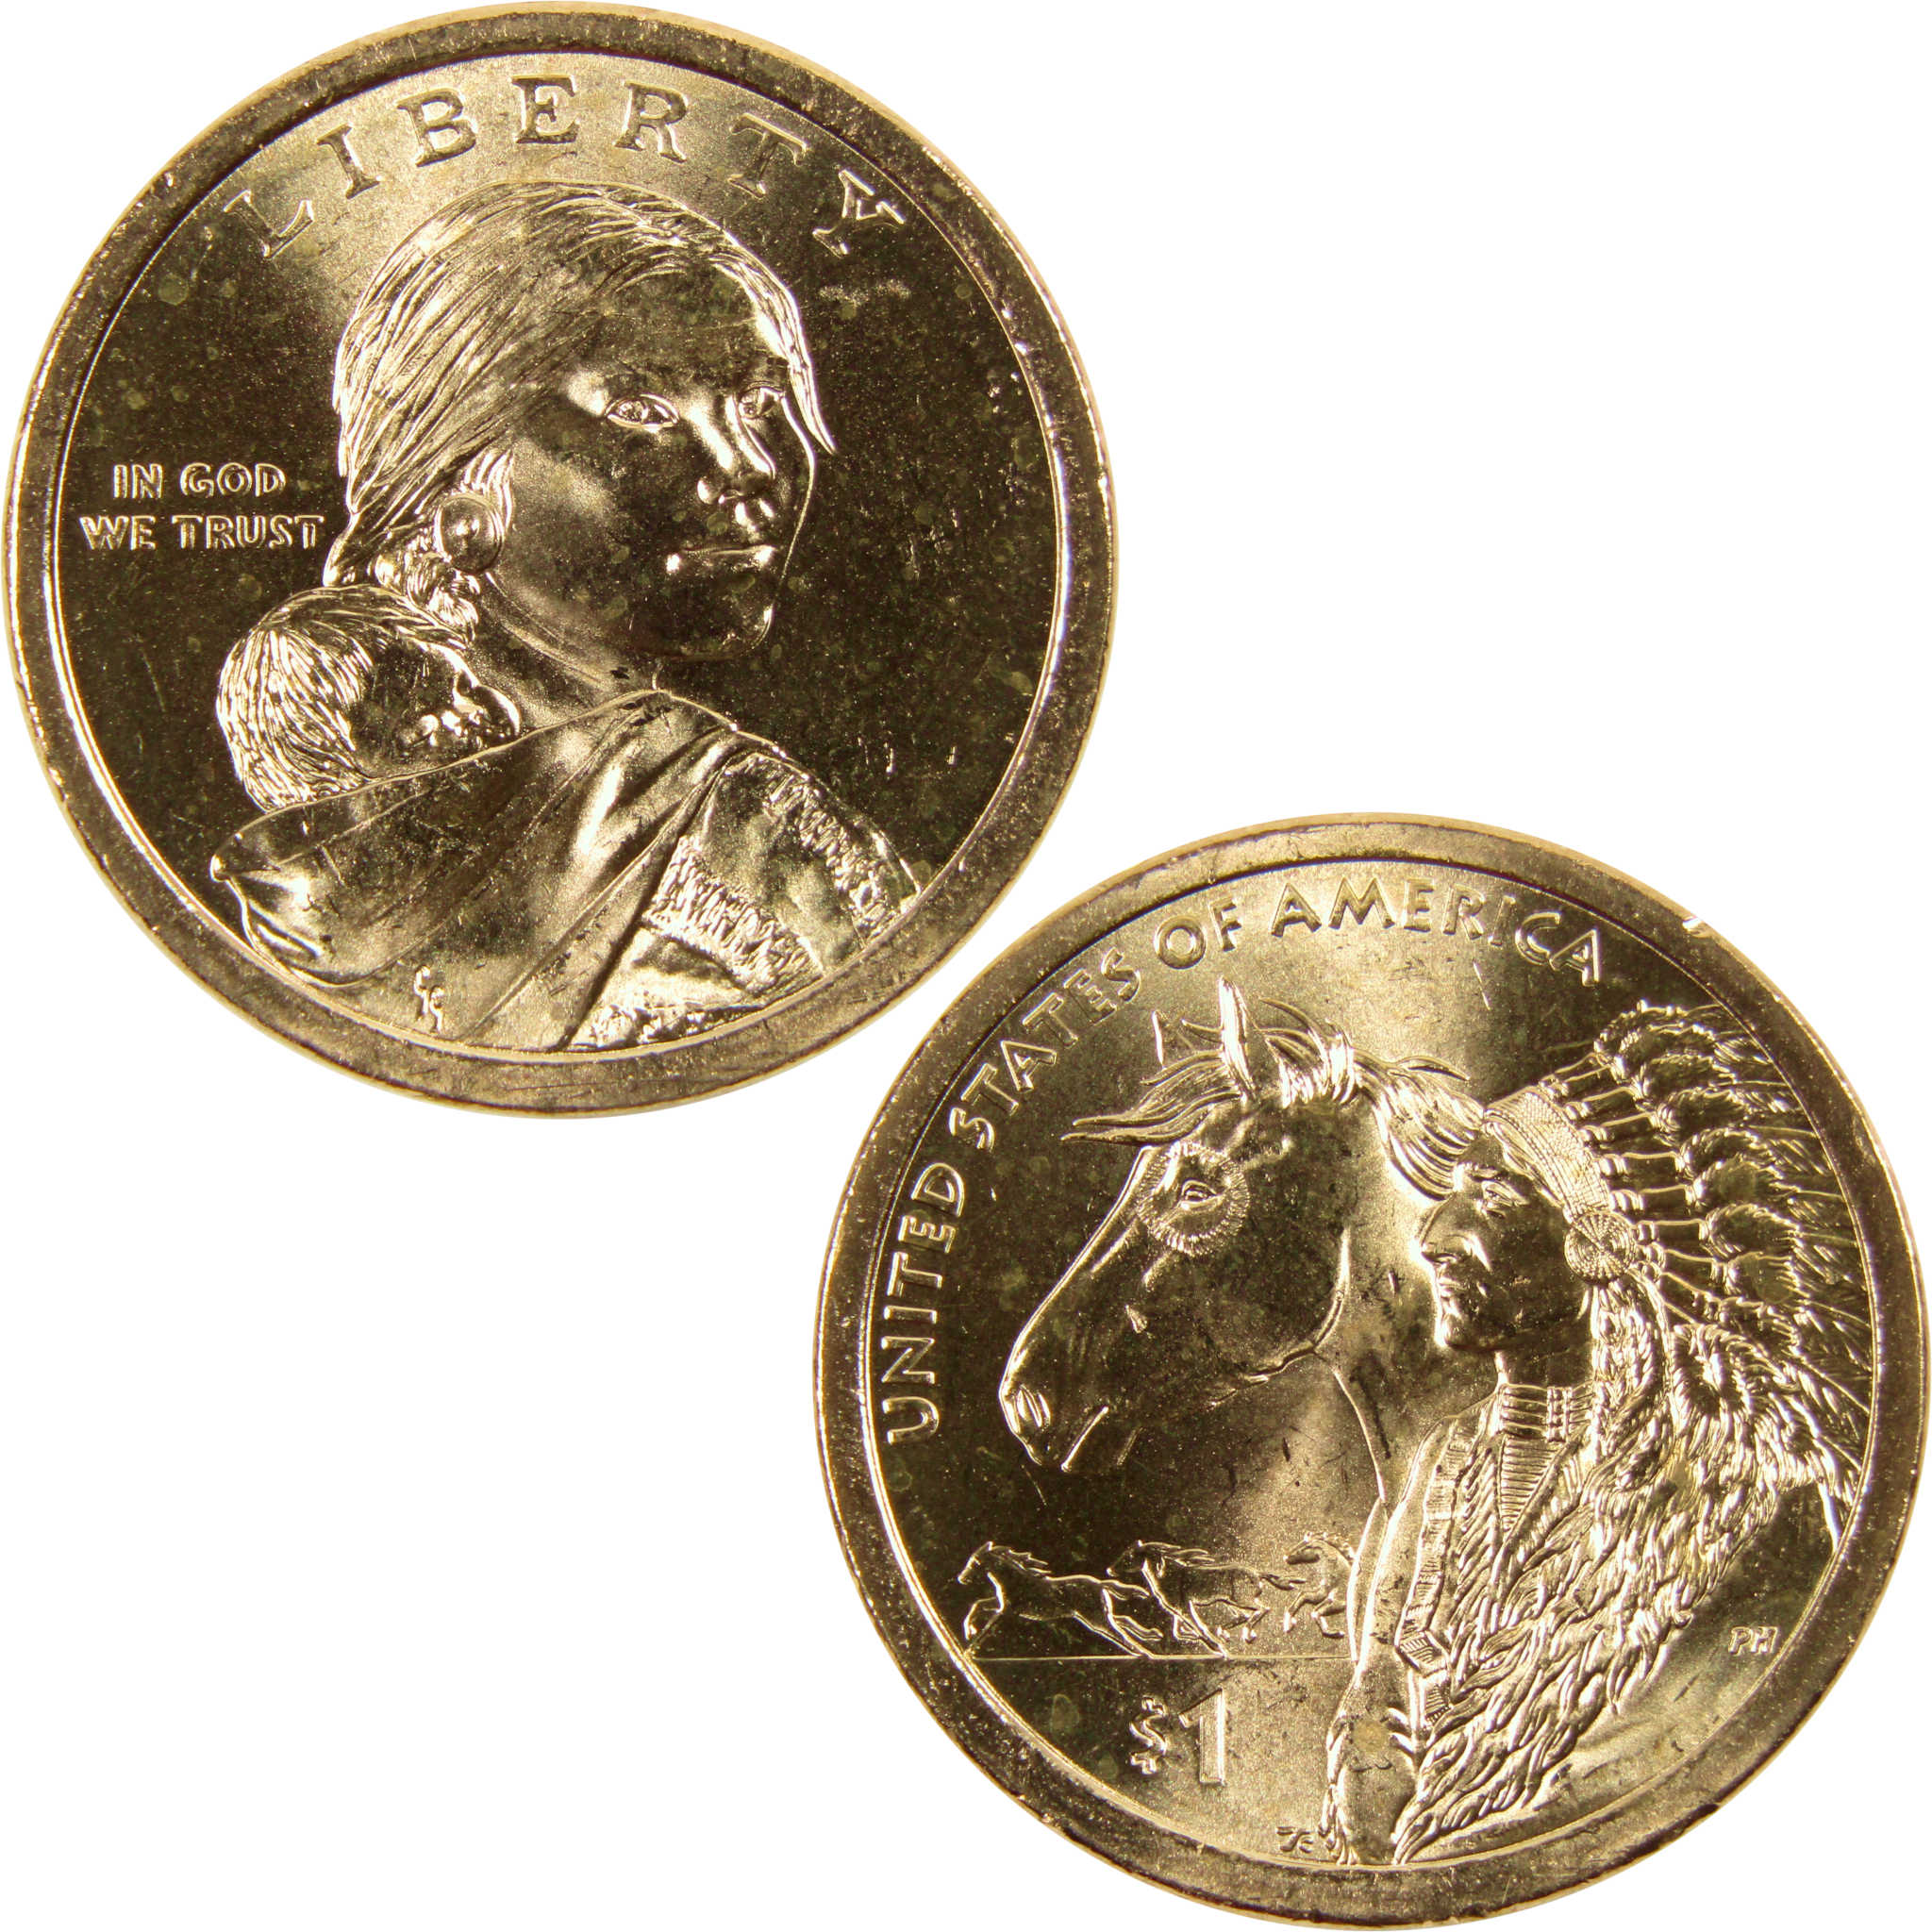 2012 P Trade Routes Native American Dollar BU Uncirculated $1 Coin